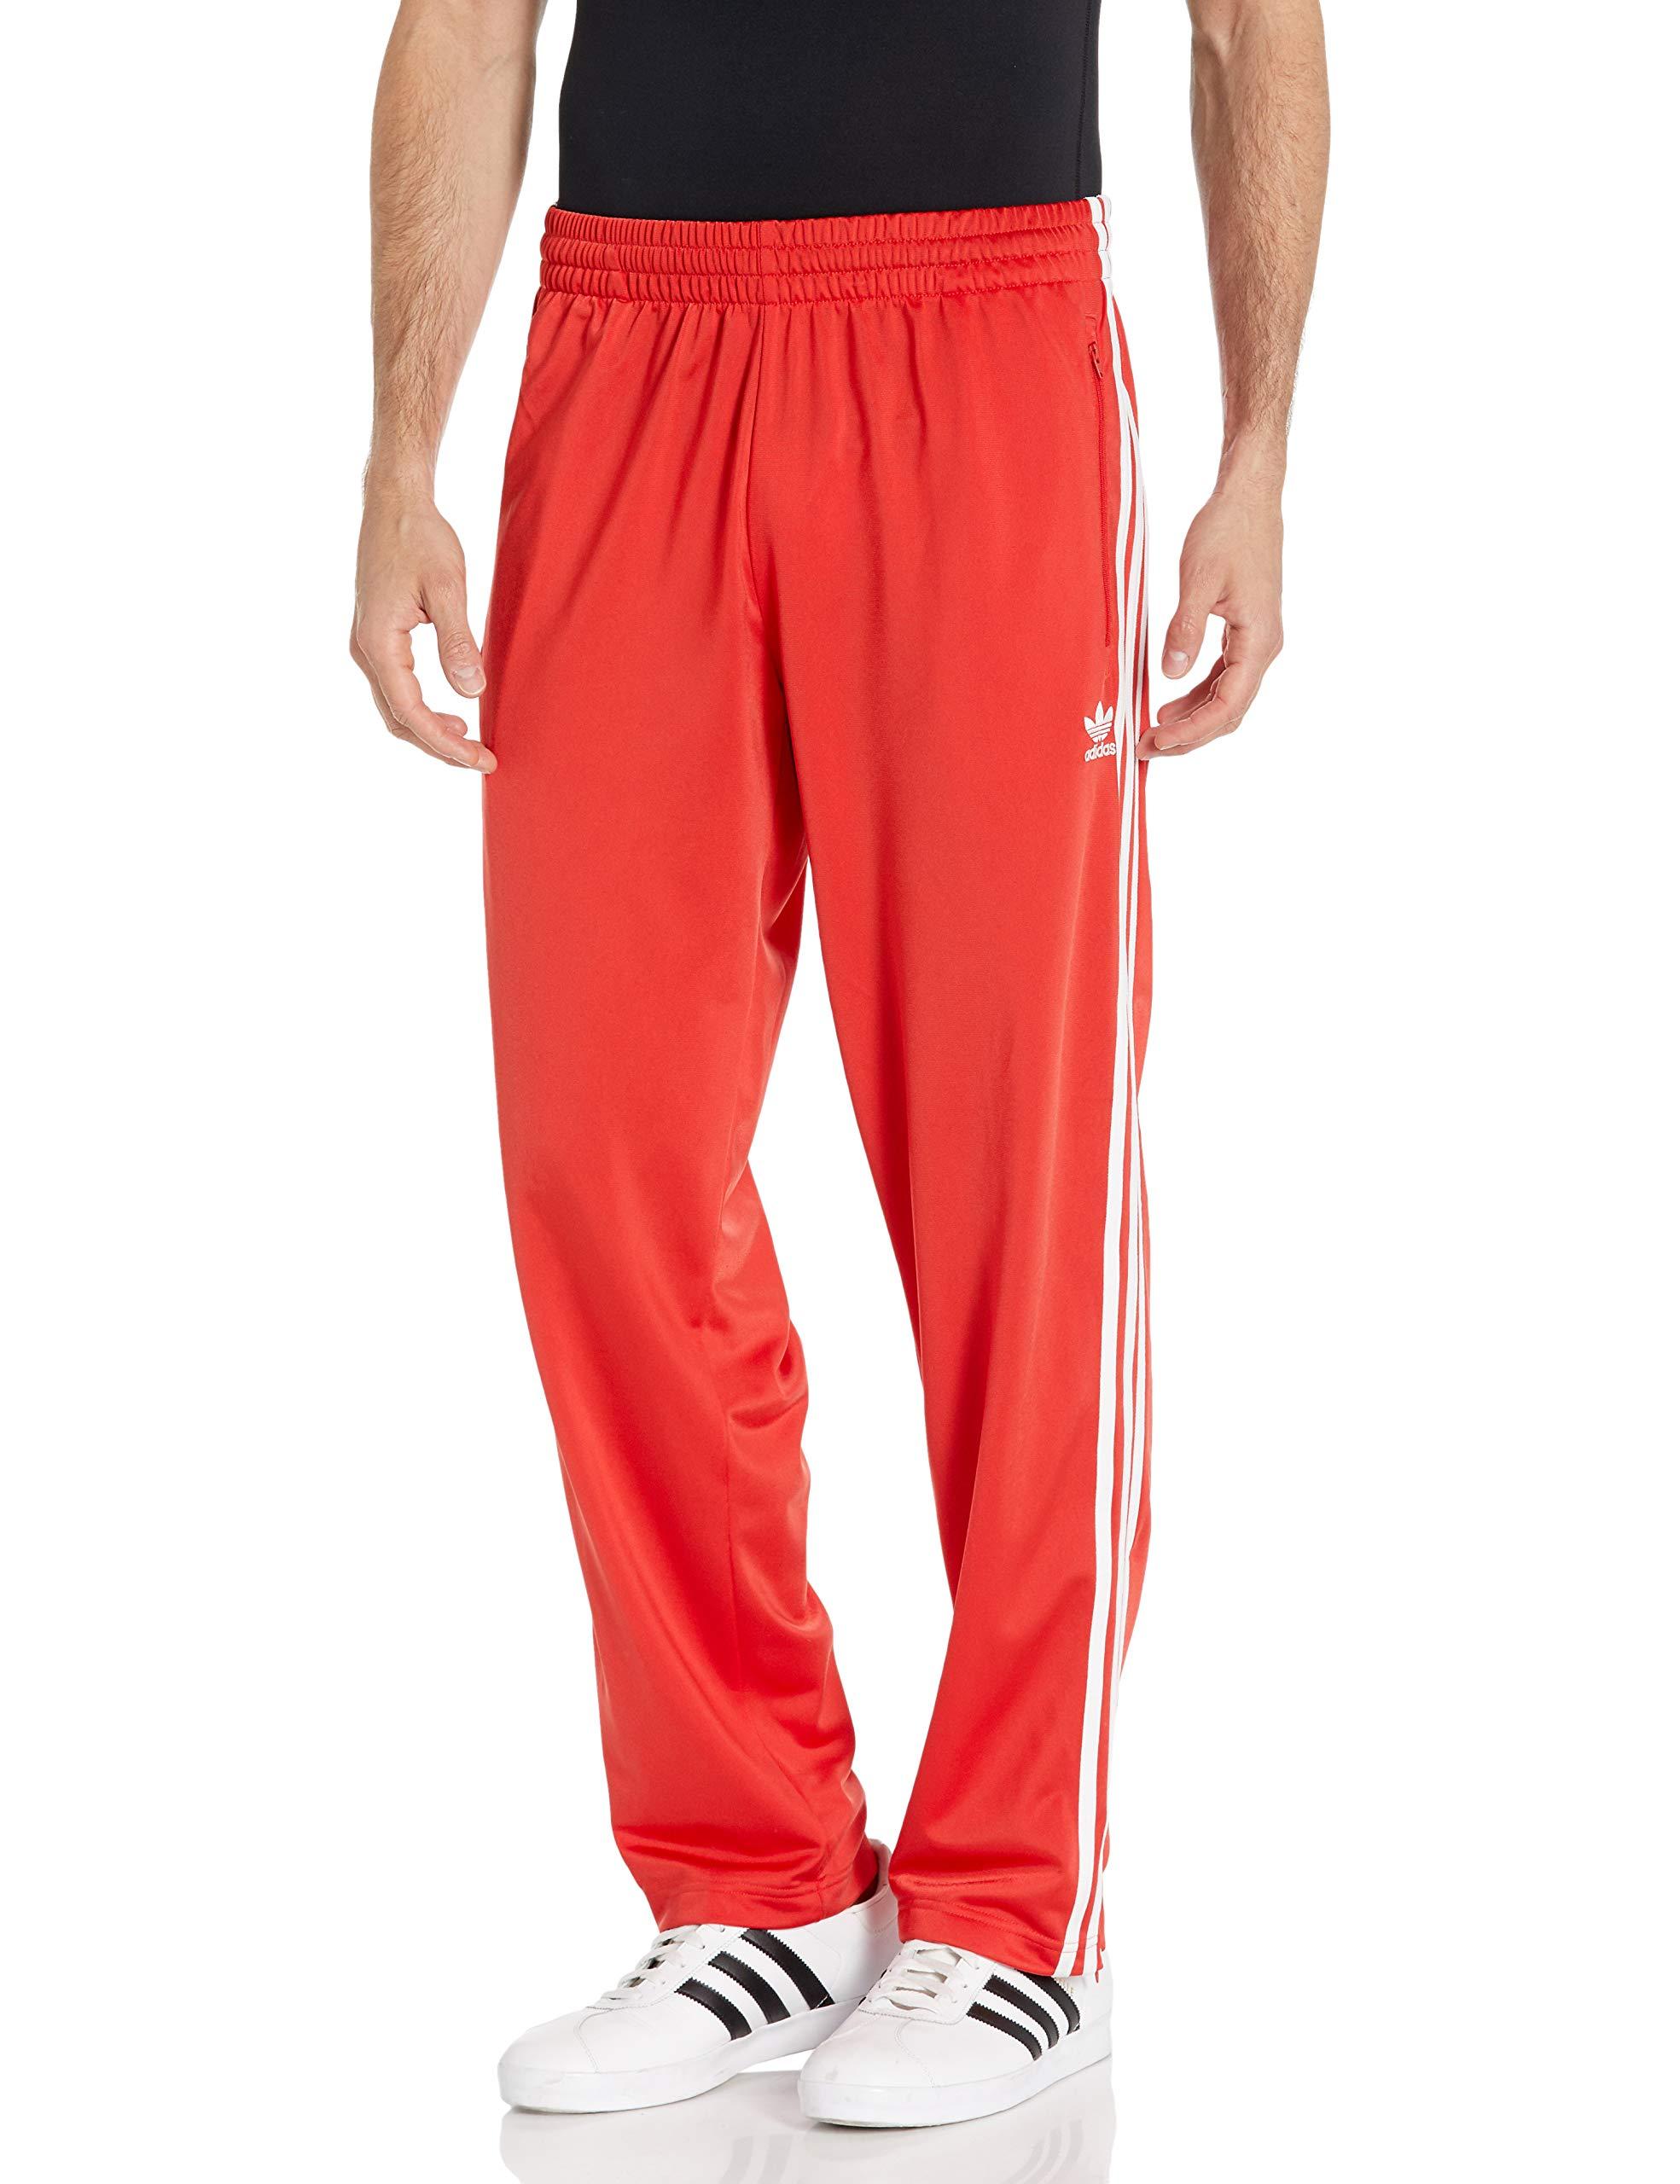 adidas Originals Firebird Track Pants Suit Lush Red for Men - Lyst